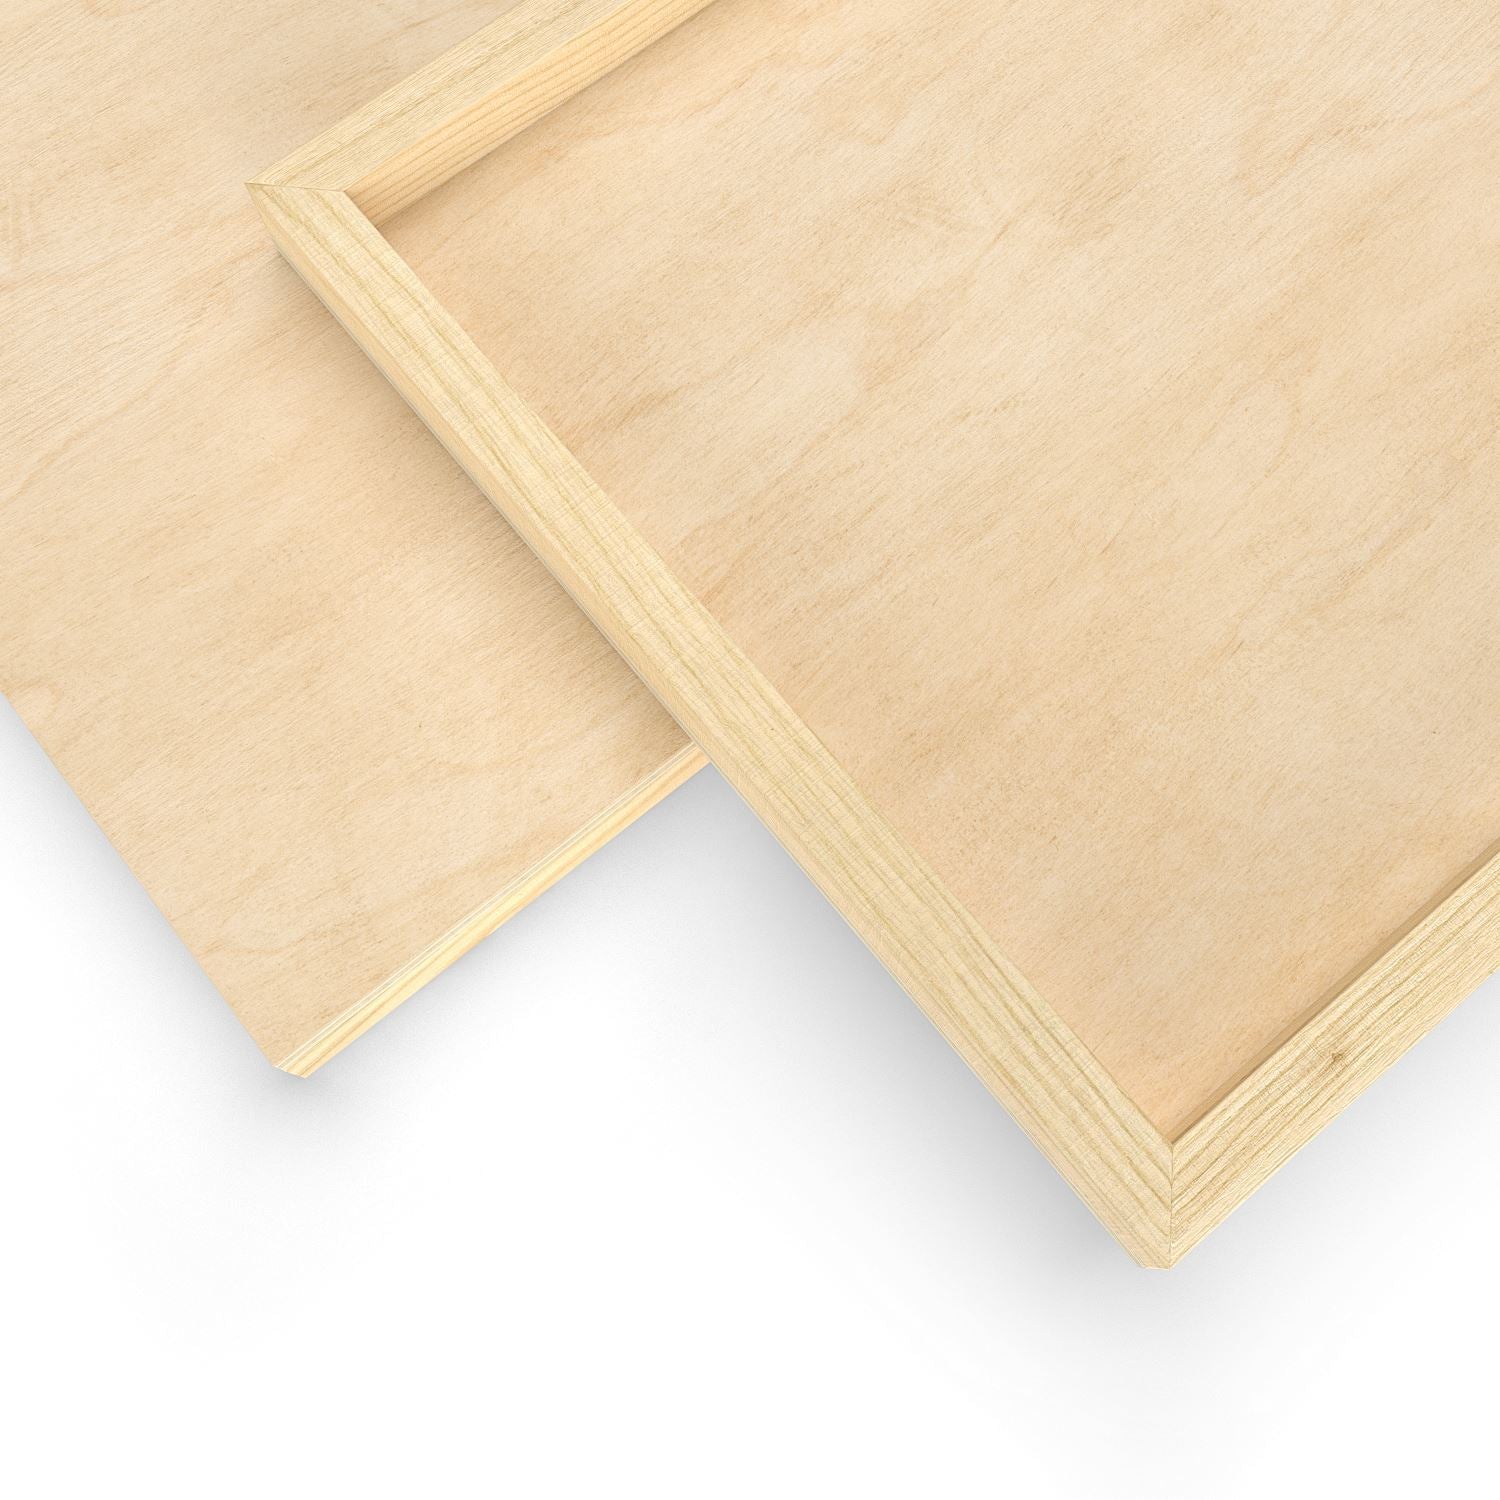 Arteza Wood Art Panels Art Supply Pack, 10x10 - 5 Pack